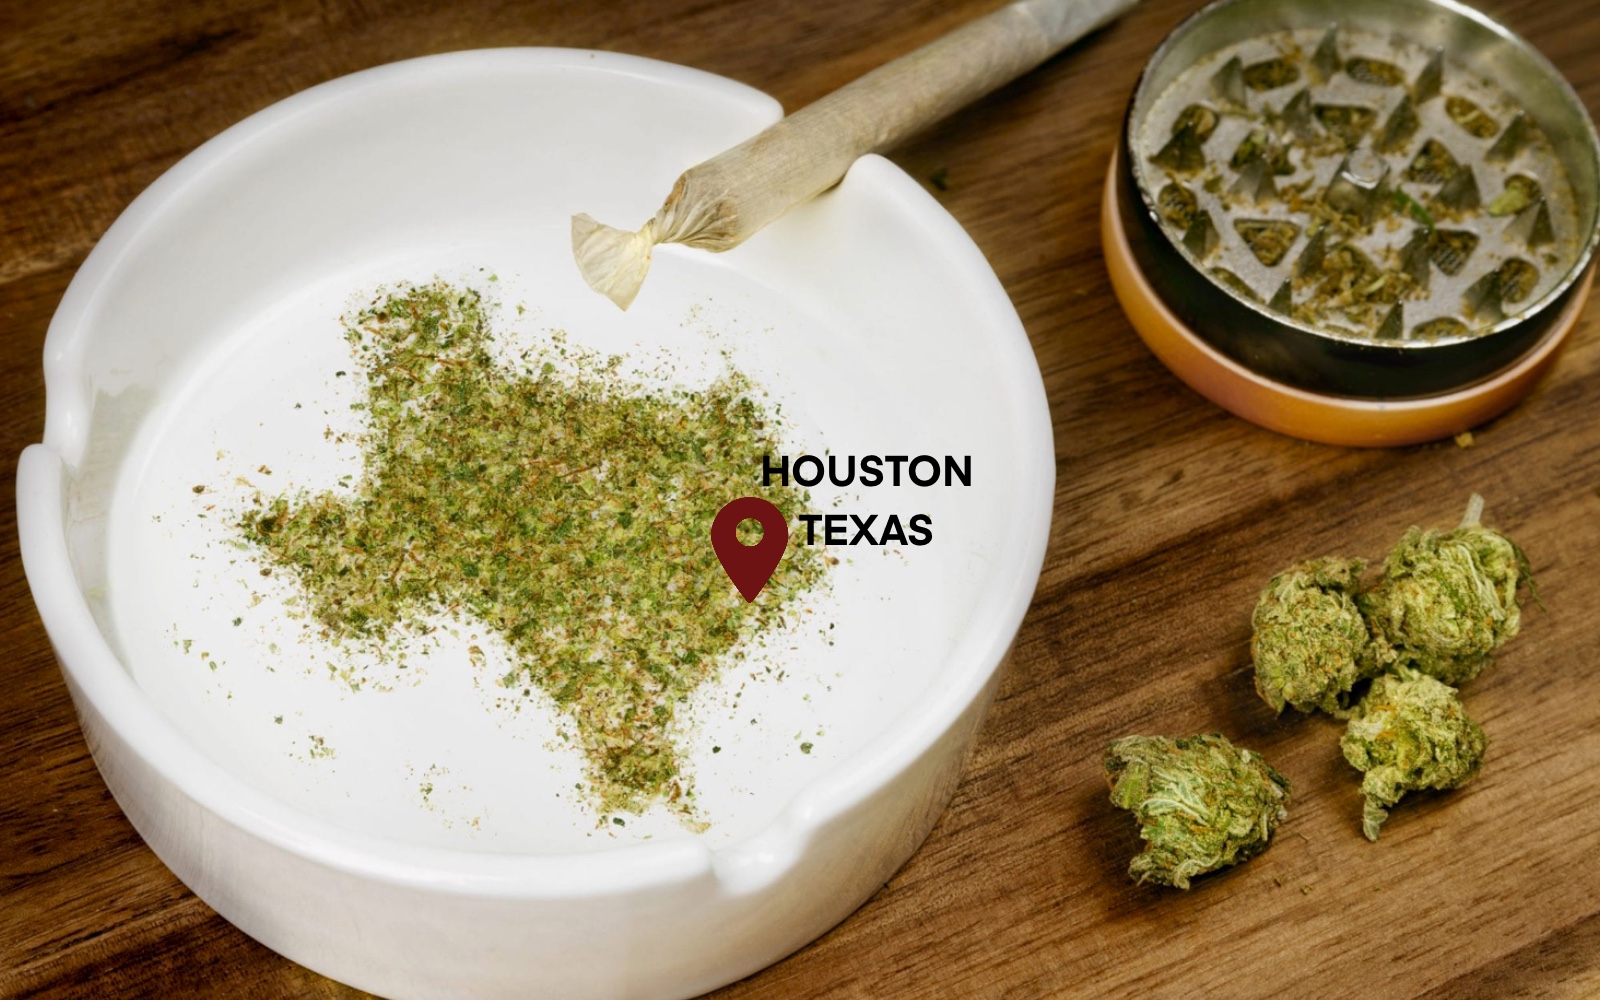 Houston Texas anuncia un plan para despenalizar el cannabis